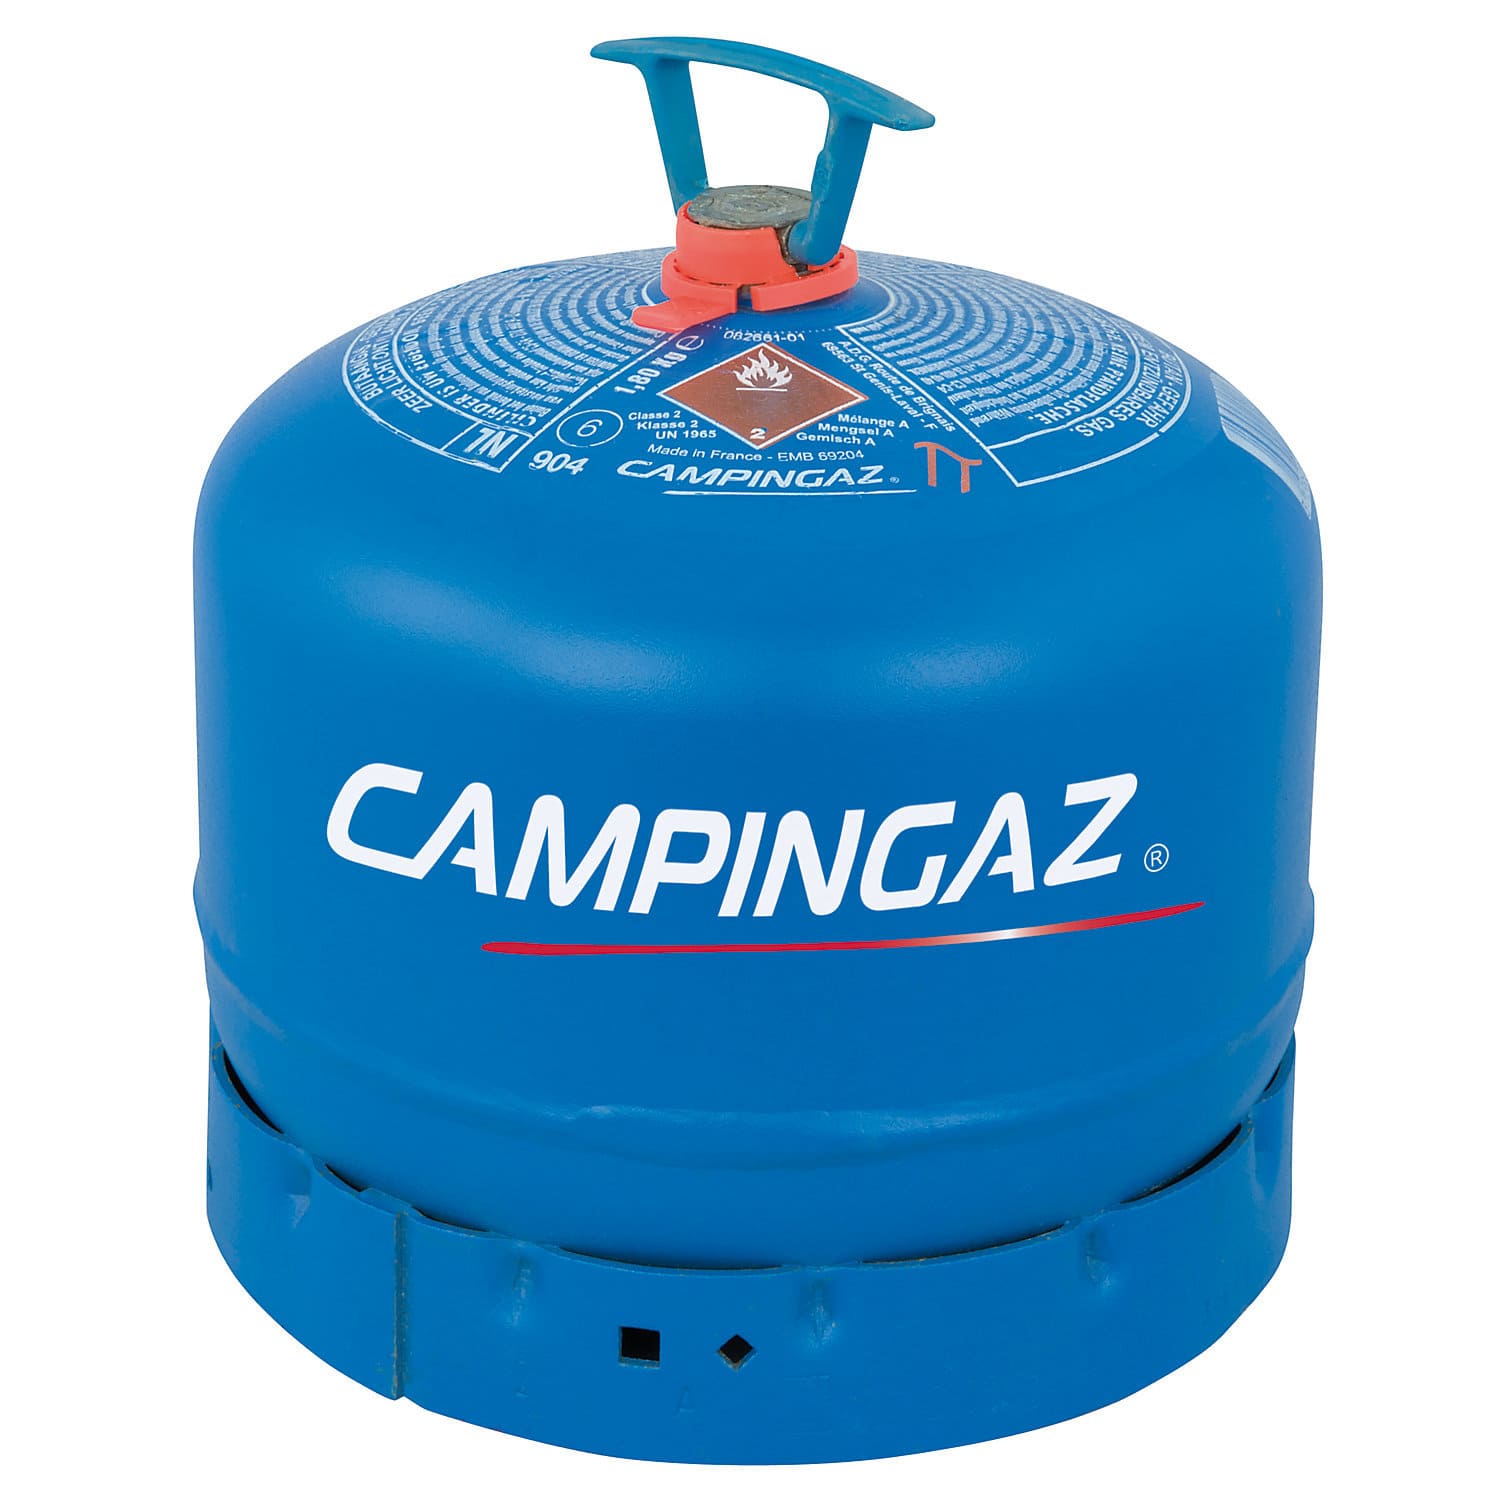 Campingas R 904 Depot Gasflasche (1.8kg)